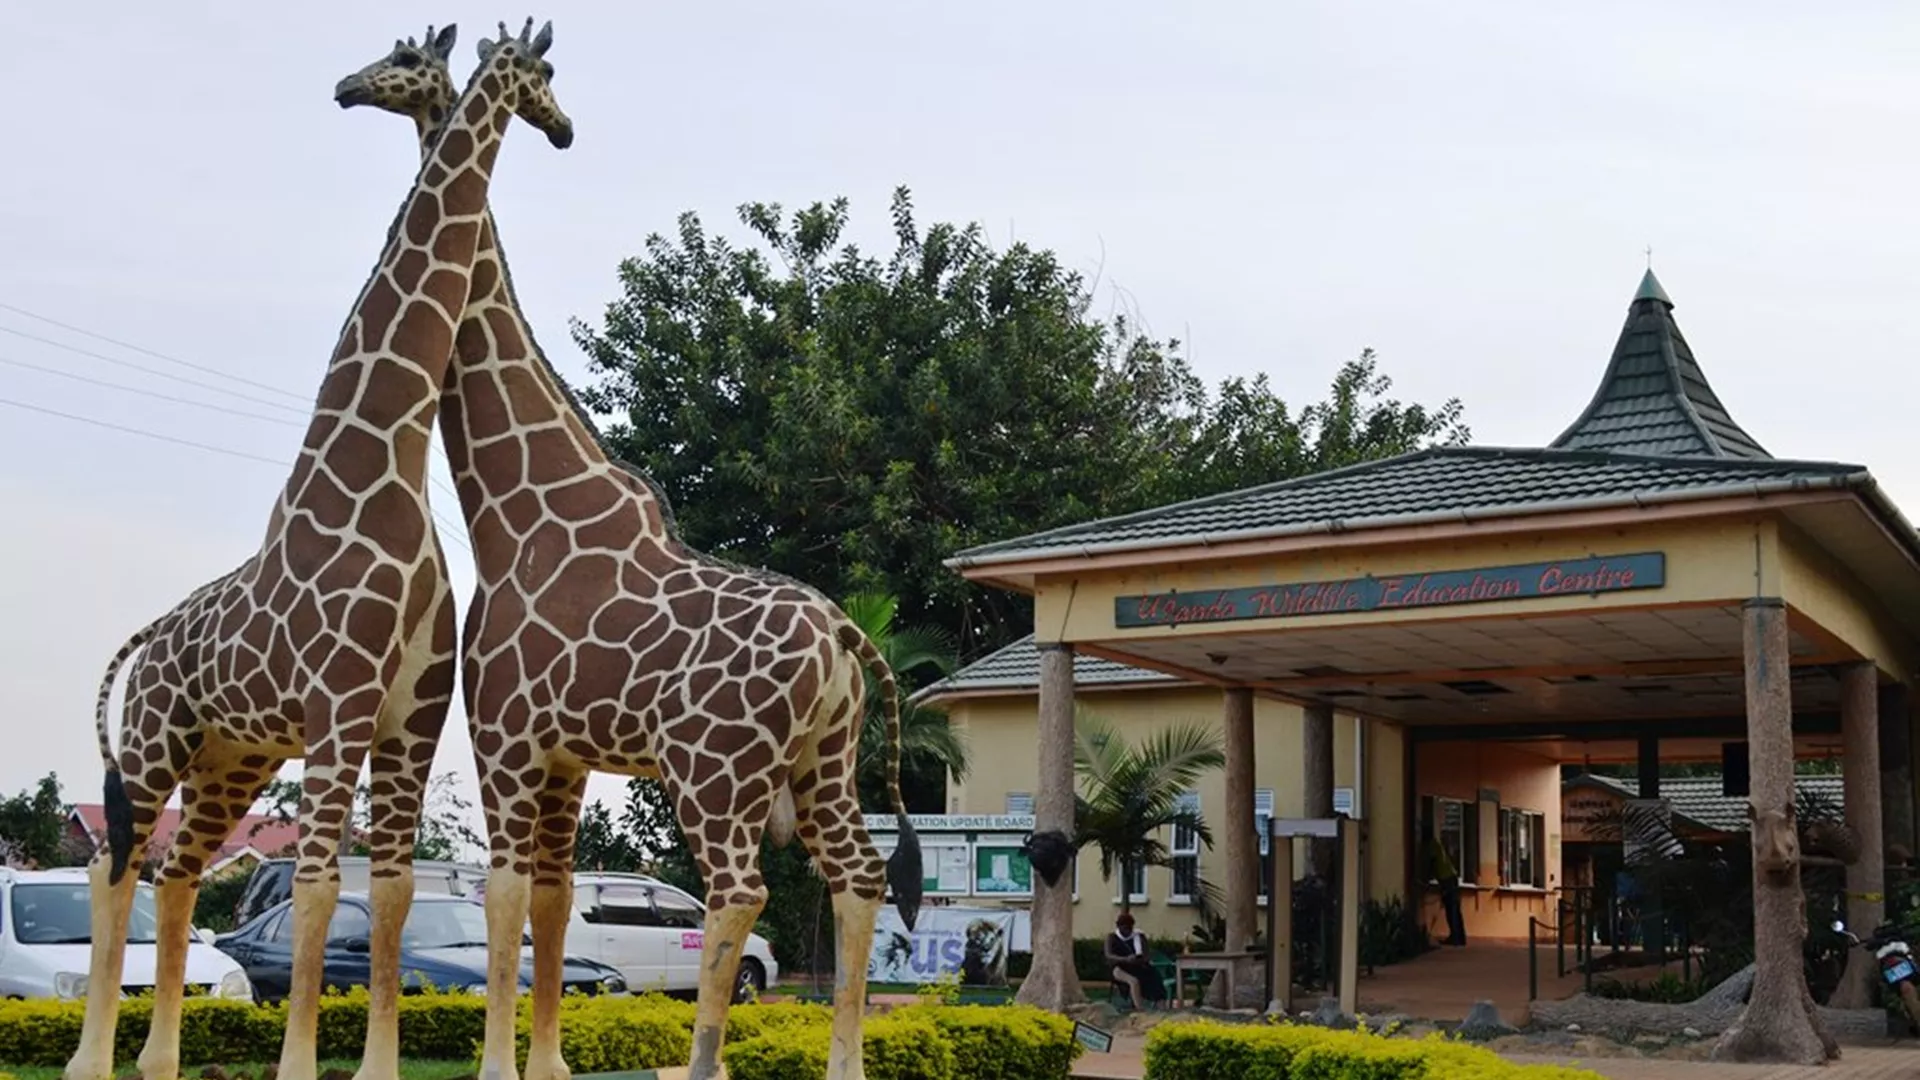 Uganda Wildlife Conservation Education Center in Uganda, Africa | Zoos & Sanctuaries - Rated 3.8